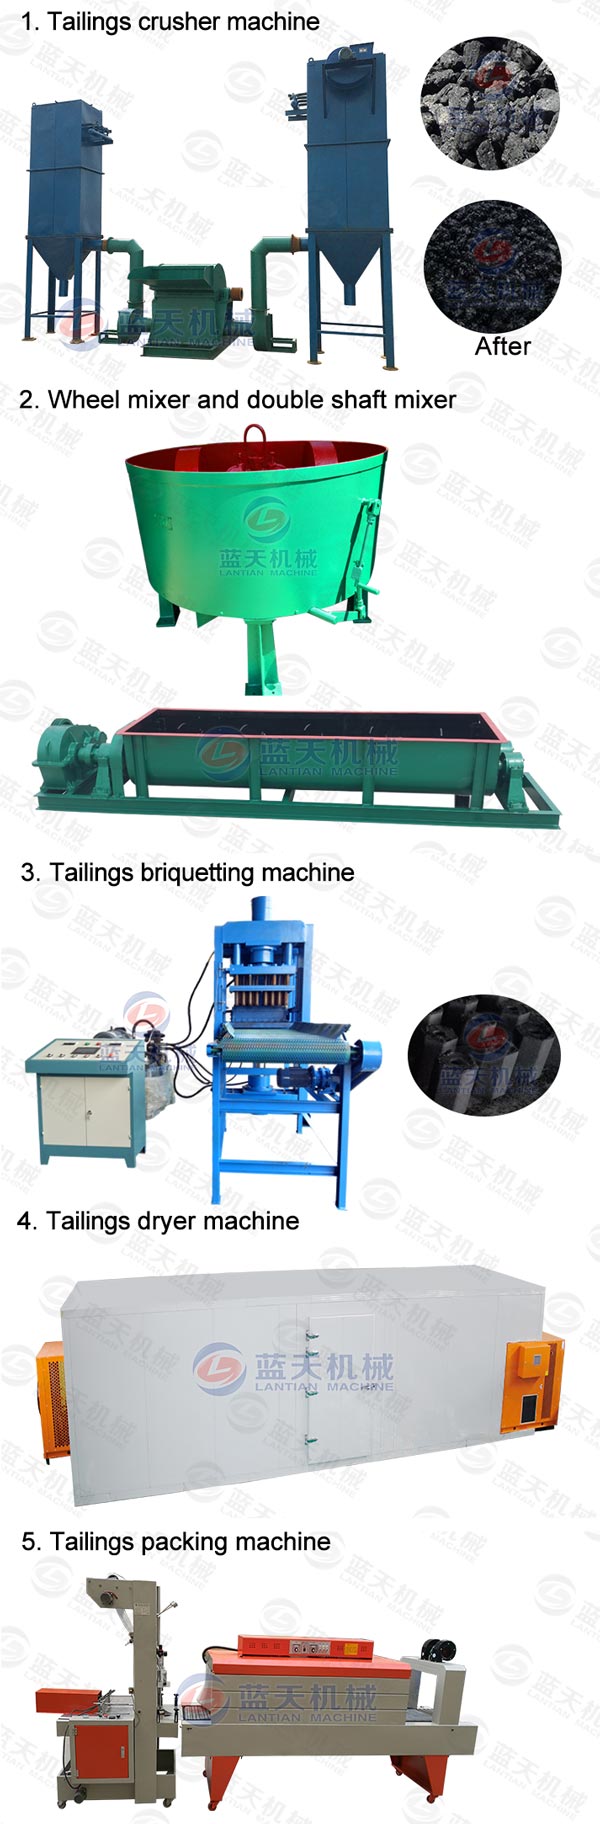 Tailings Briquetting Machine 